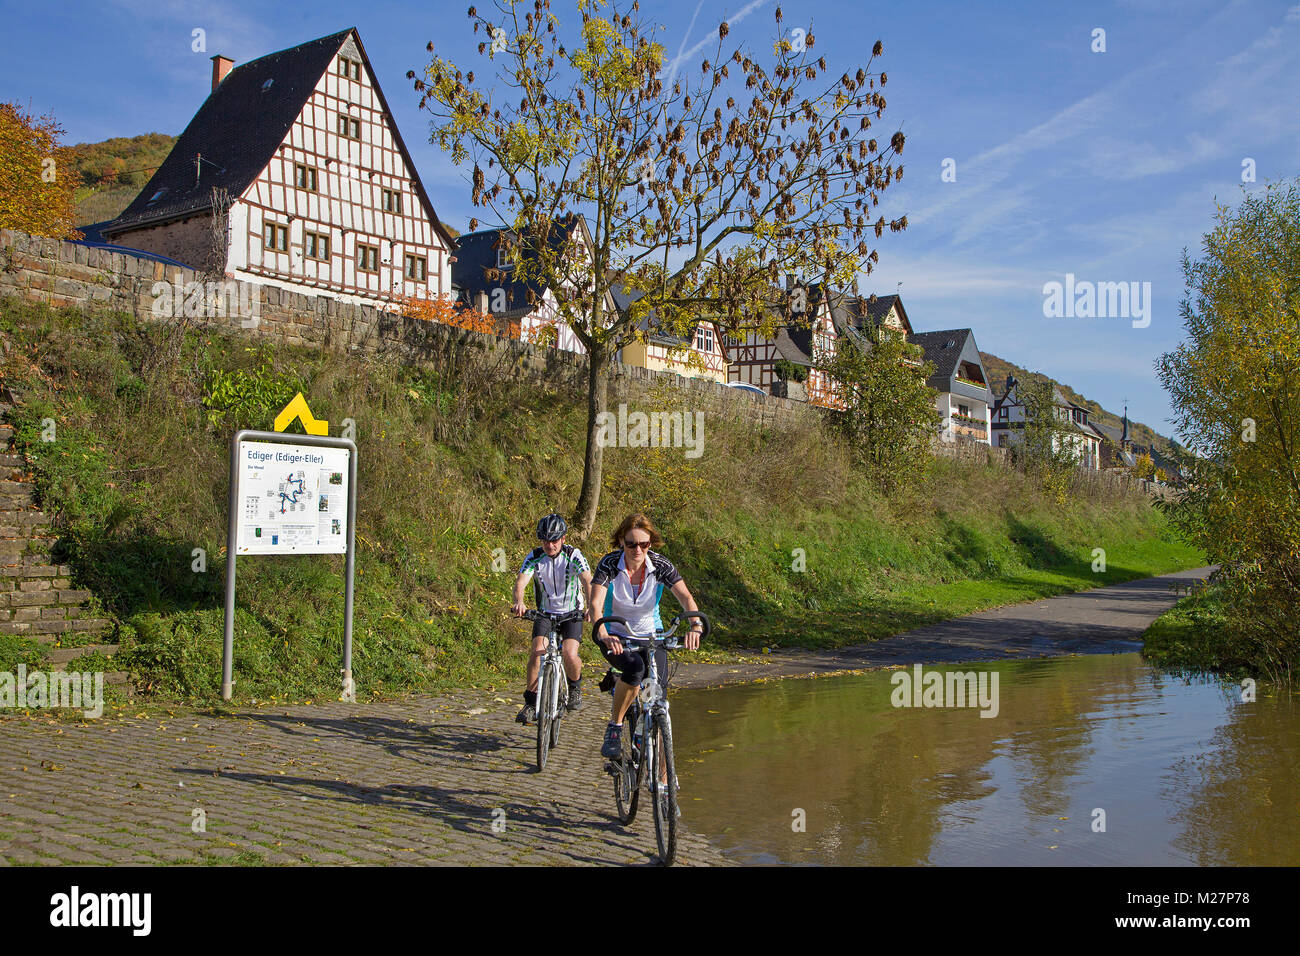 Cyclists at a overflowed bike trail, riverside of Moselle river, wine village Ediger, Ediger-Eller, Rhineland-Palatinate, Germany, Europe Stock Photo